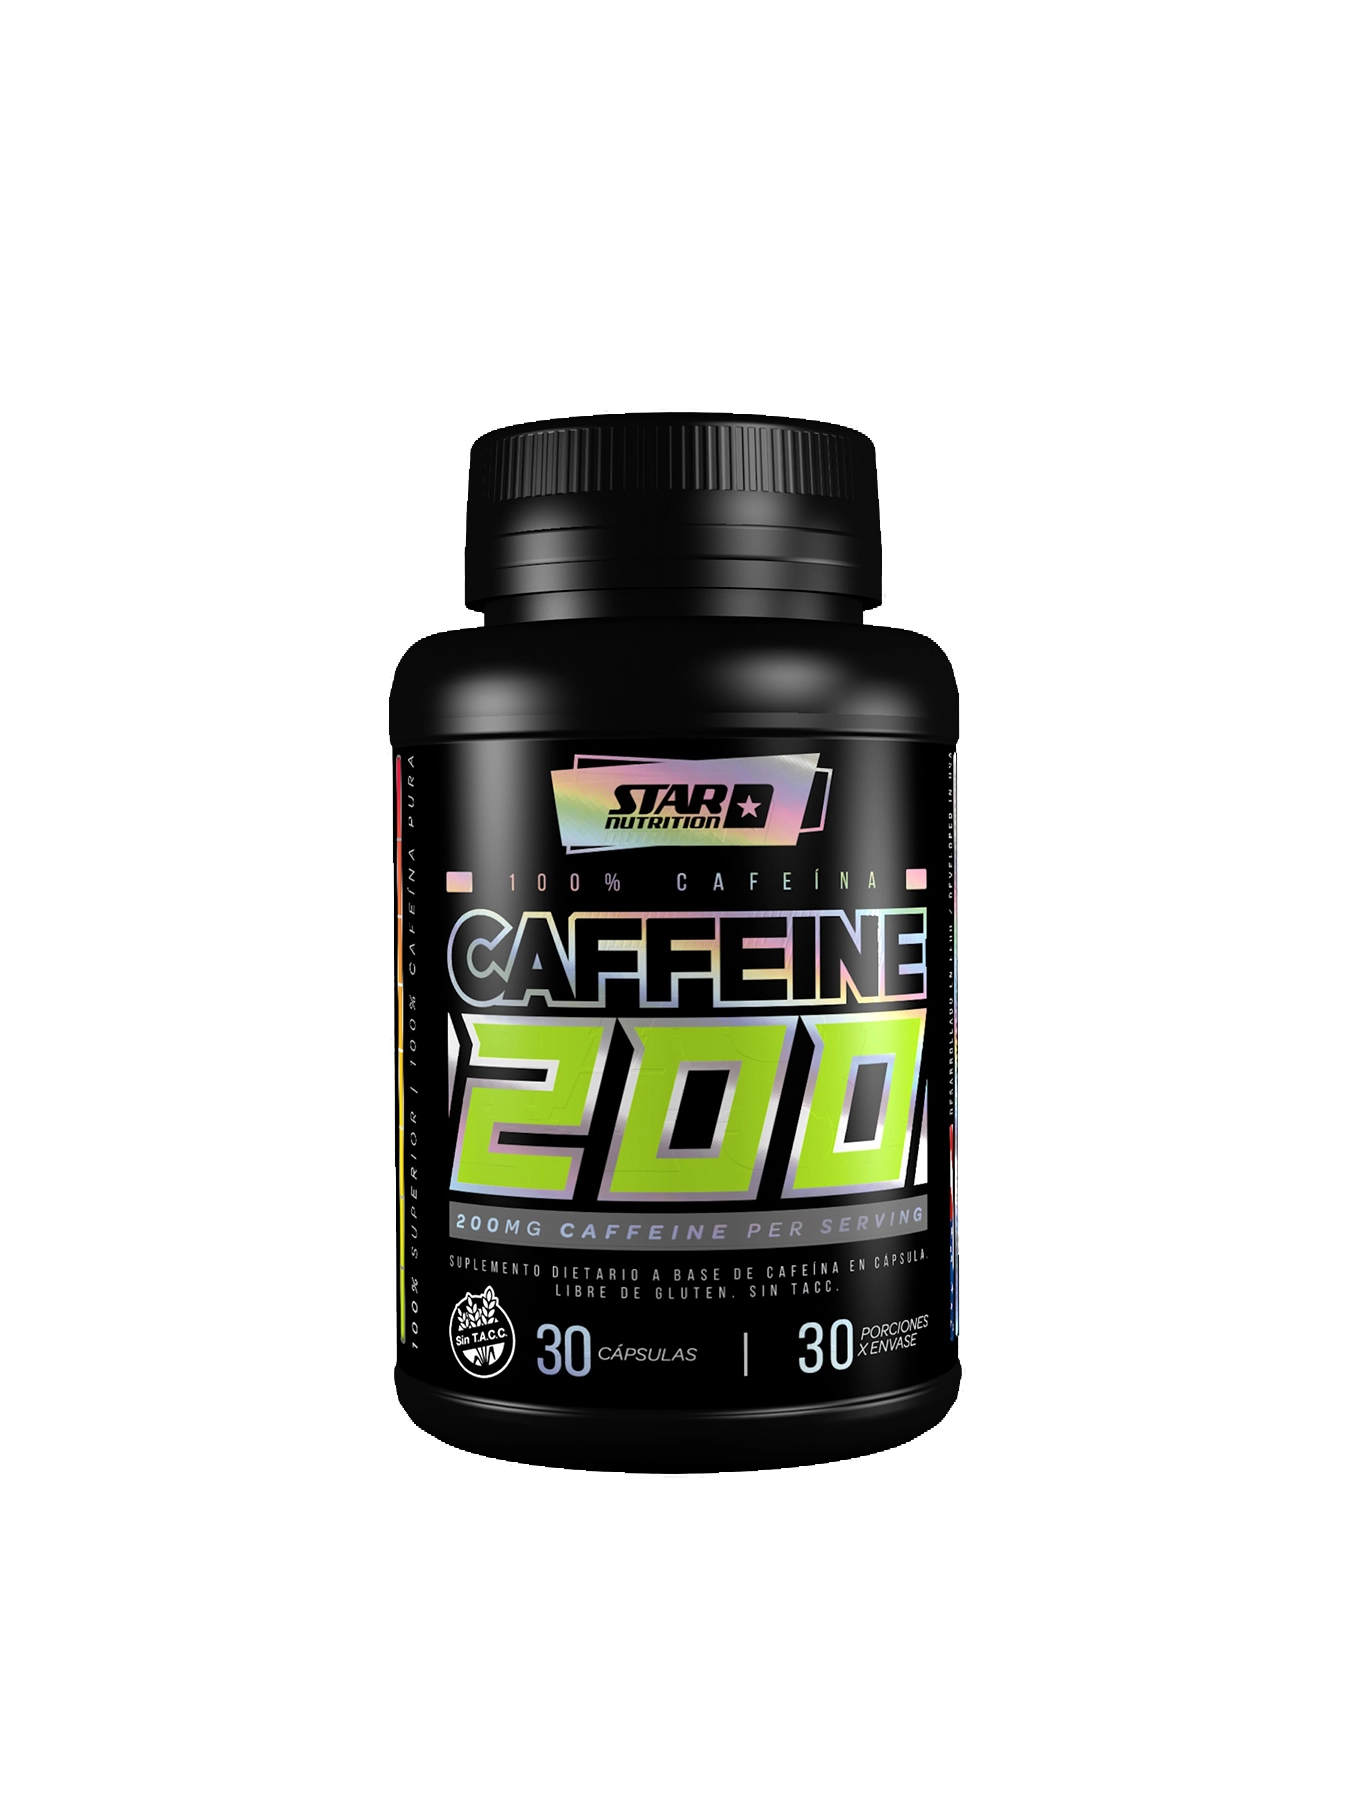 Caffeine200